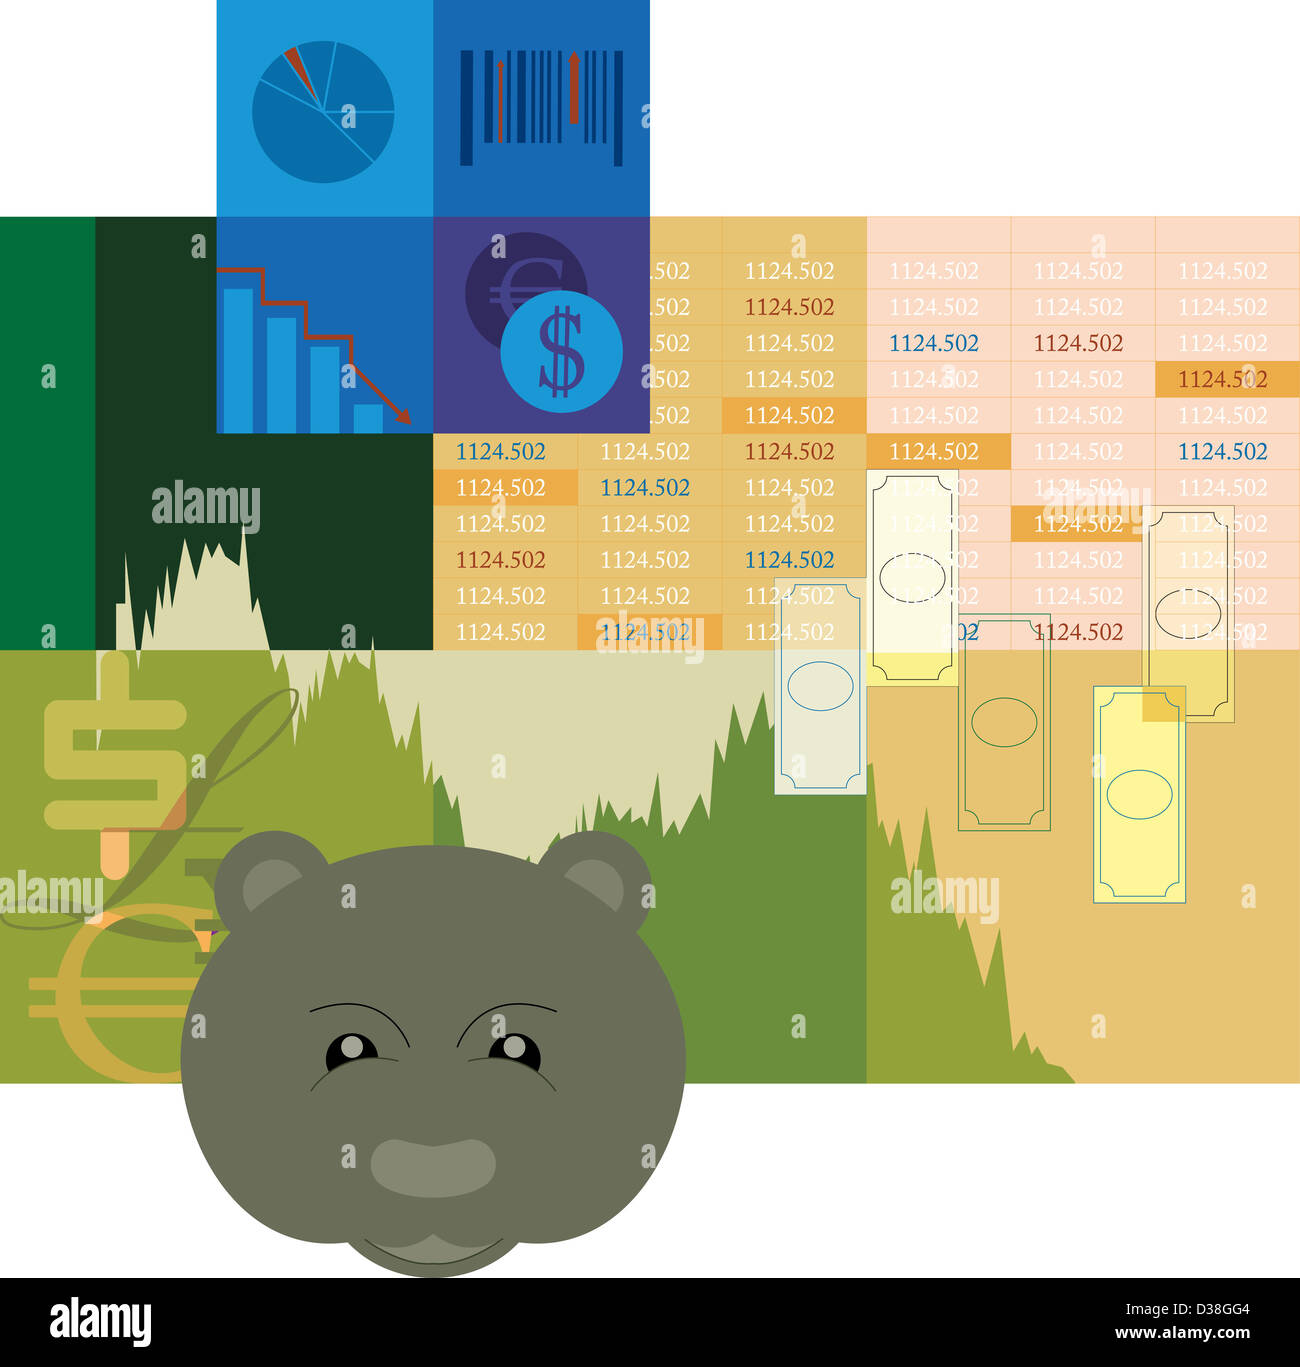 Illustration showing the bear market Stock Photo